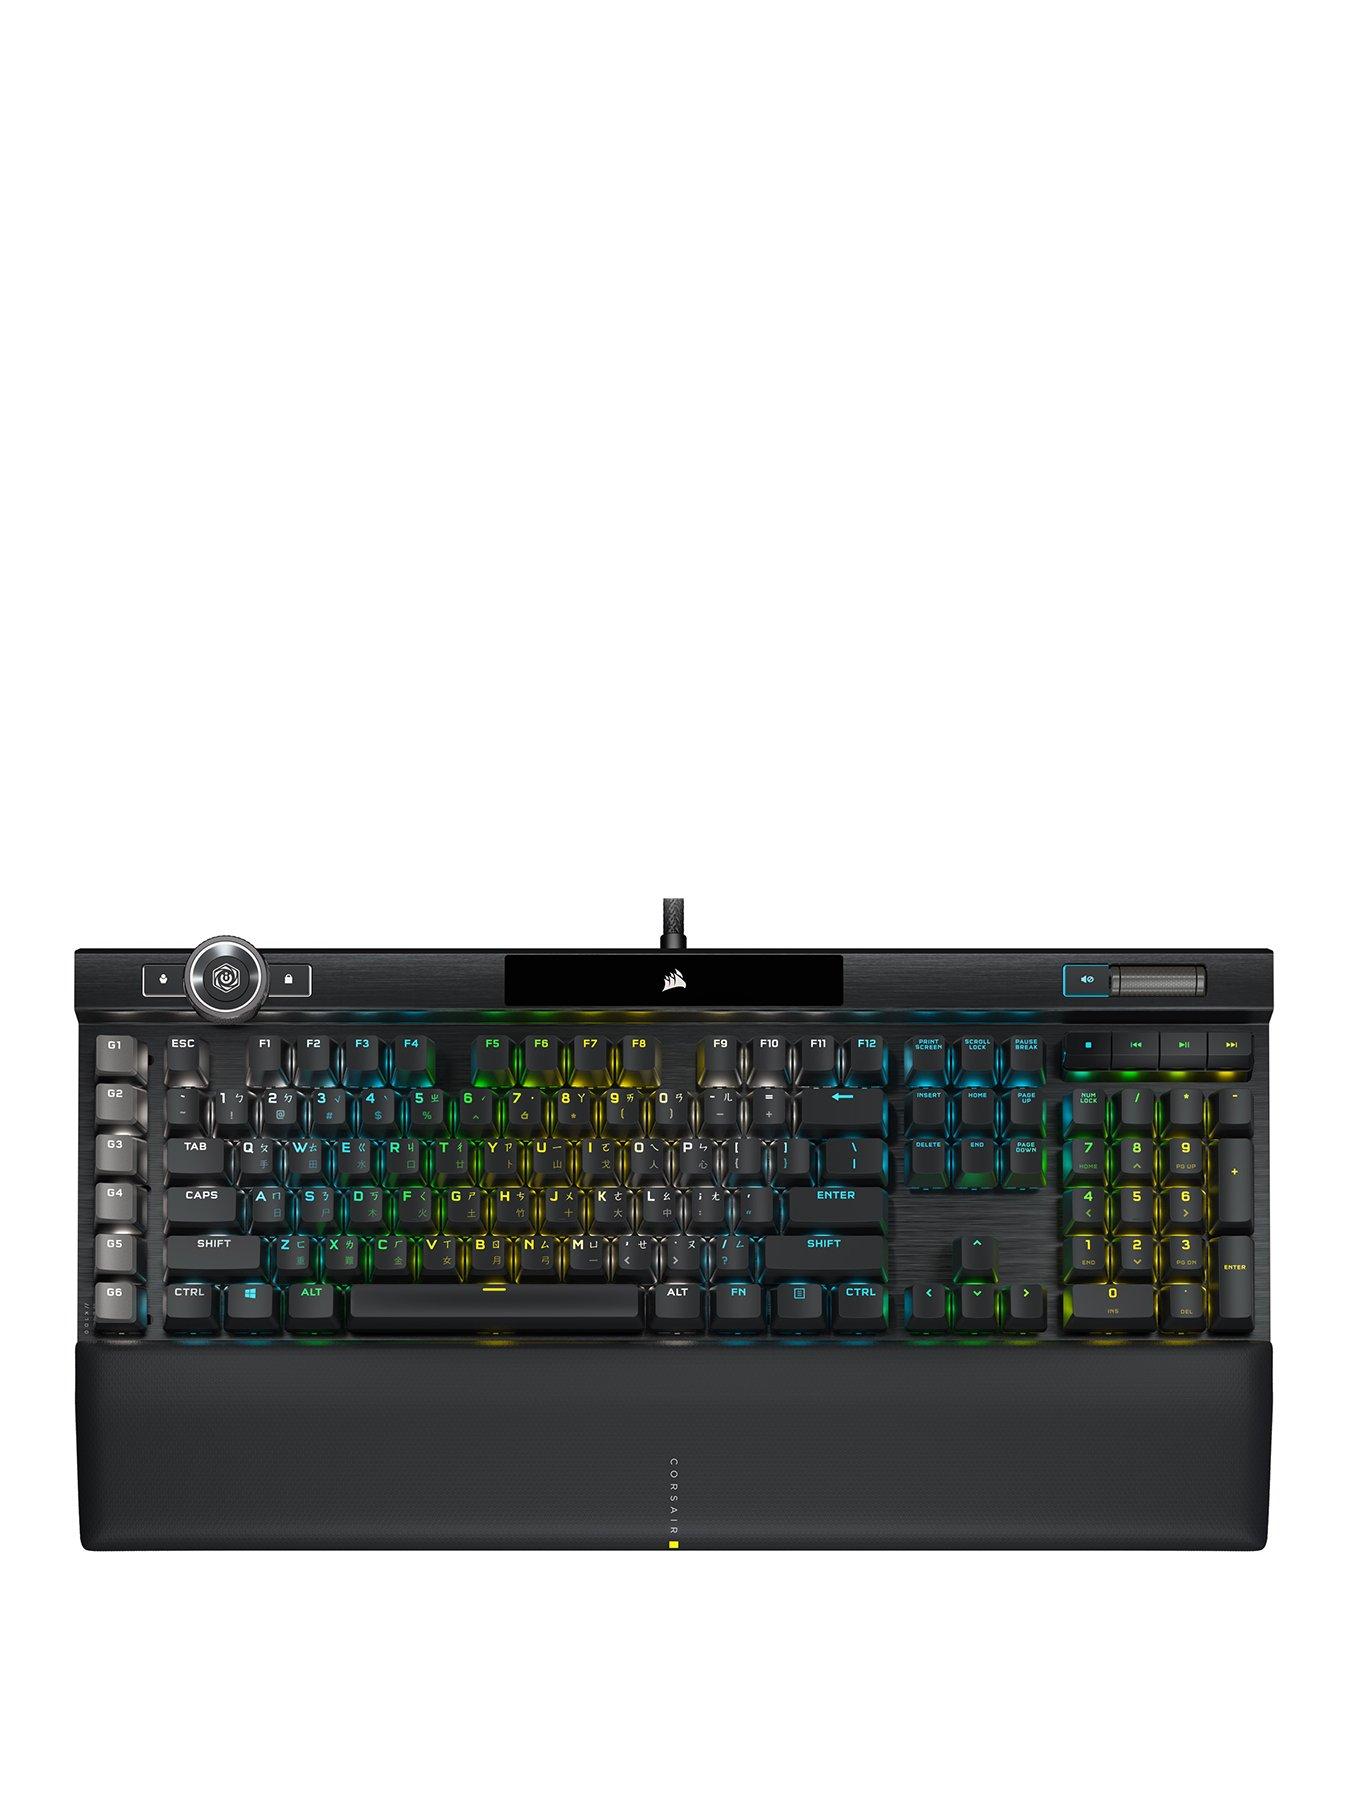 Corsair K100 RGB keyboard review (Page 9)